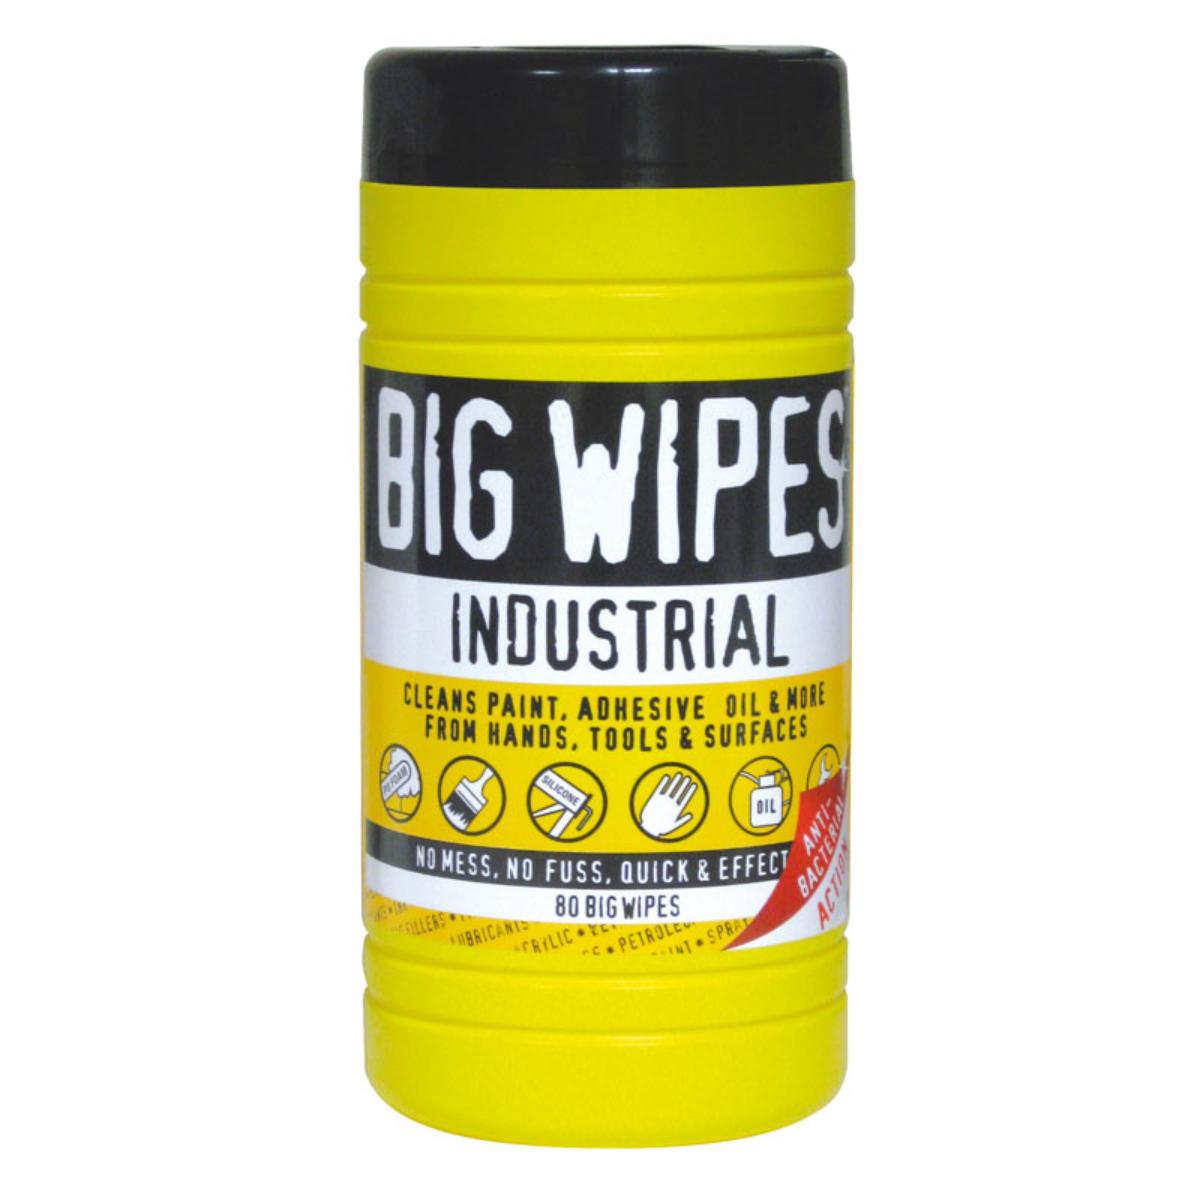 BIG WIPES INDUSTRIAL CLEANING TOWEL 80PK